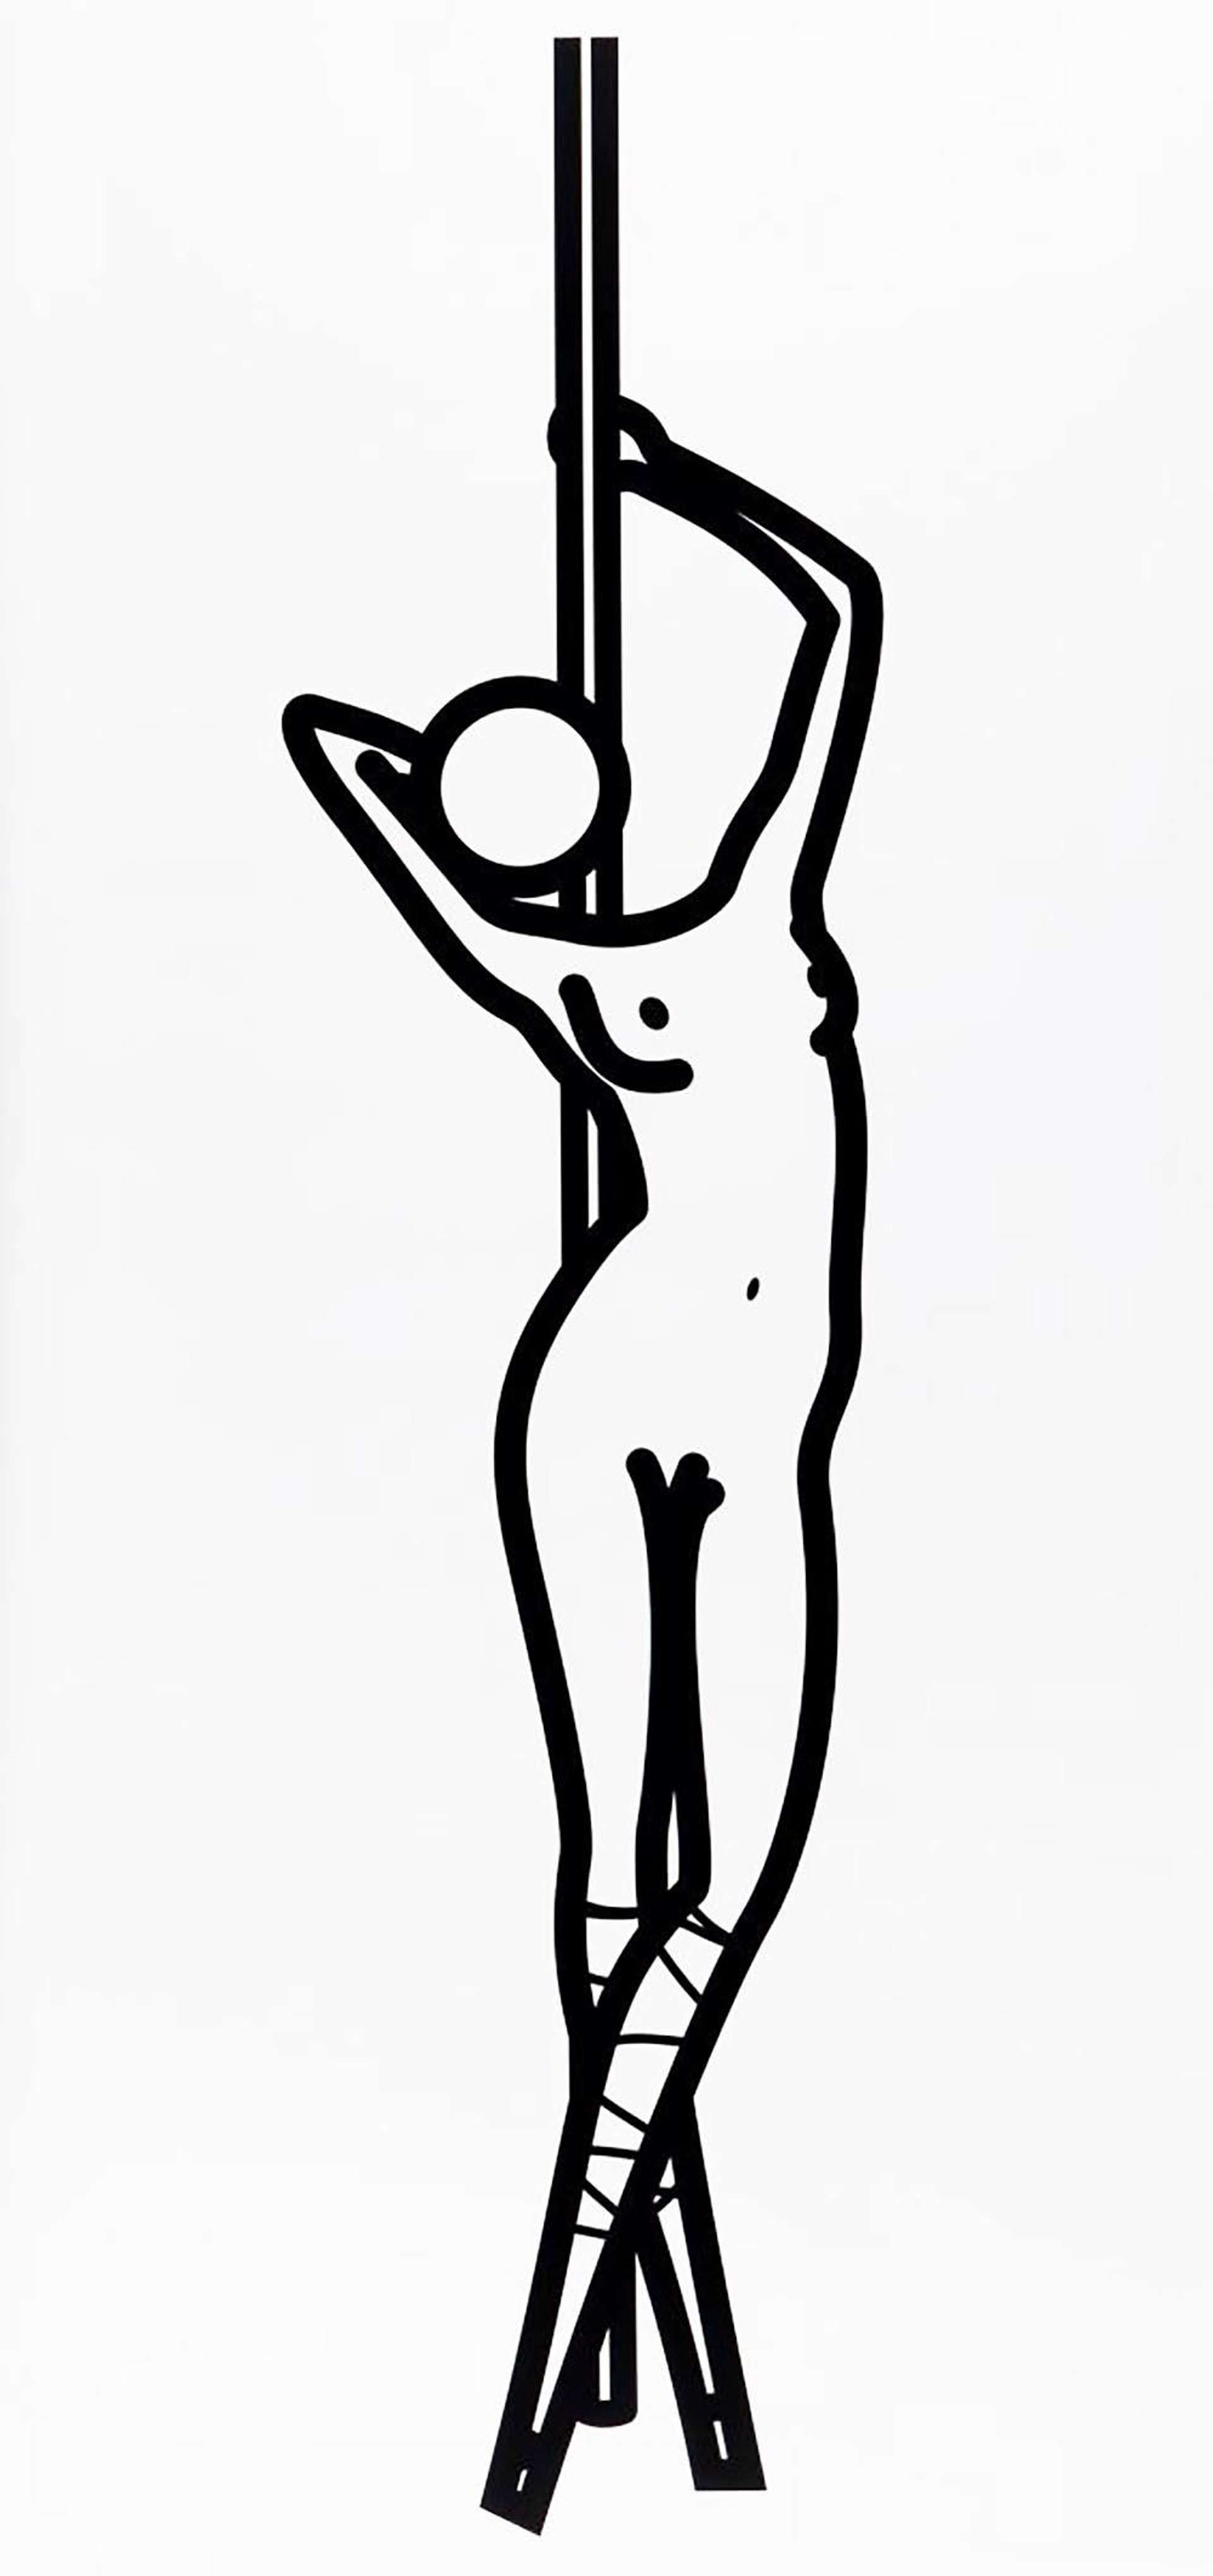 Julian Opie: This is Shahnoza – Shahnoza Pole Dancer - Unsigned Print